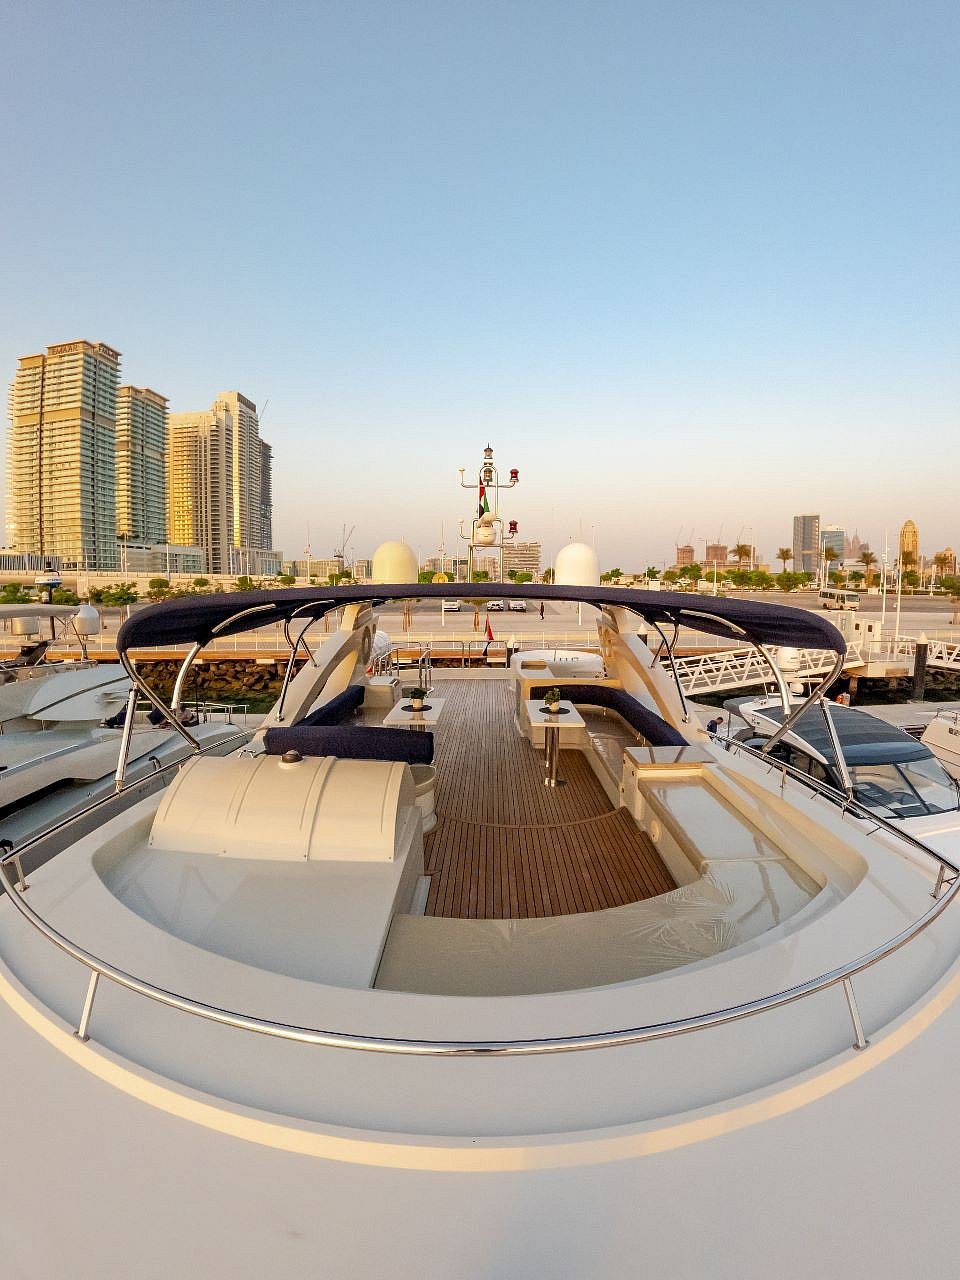 إيجار Kona 110 قدم (2022) فيDubai Harbour في دبي 3